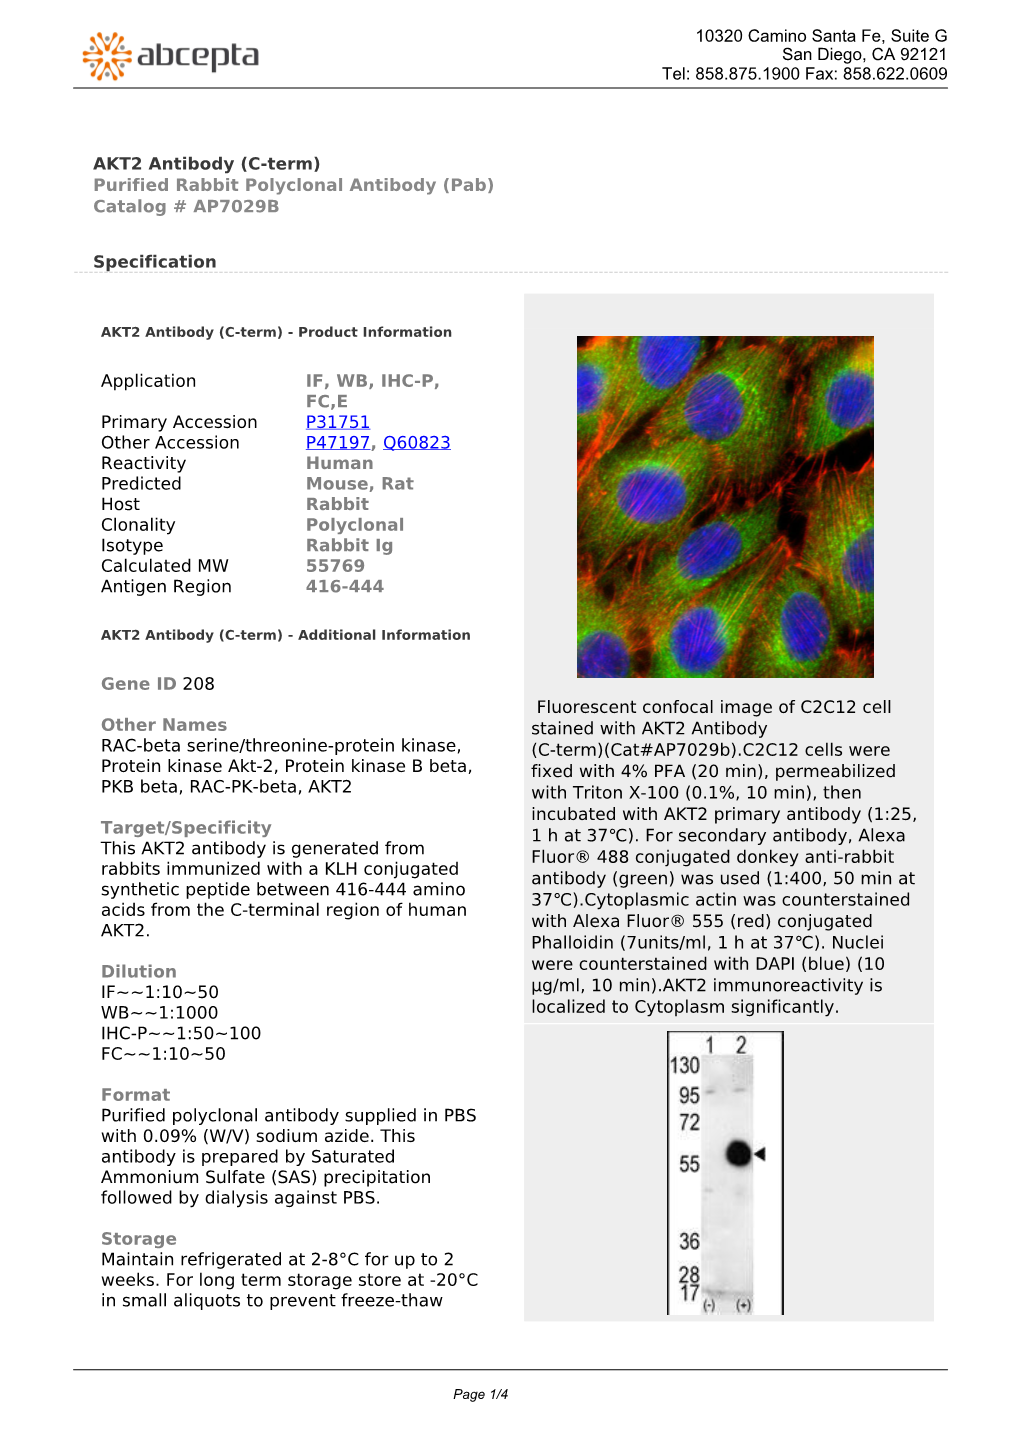 AKT2 Antibody (C-Term) Purified Rabbit Polyclonal Antibody (Pab) Catalog # AP7029B